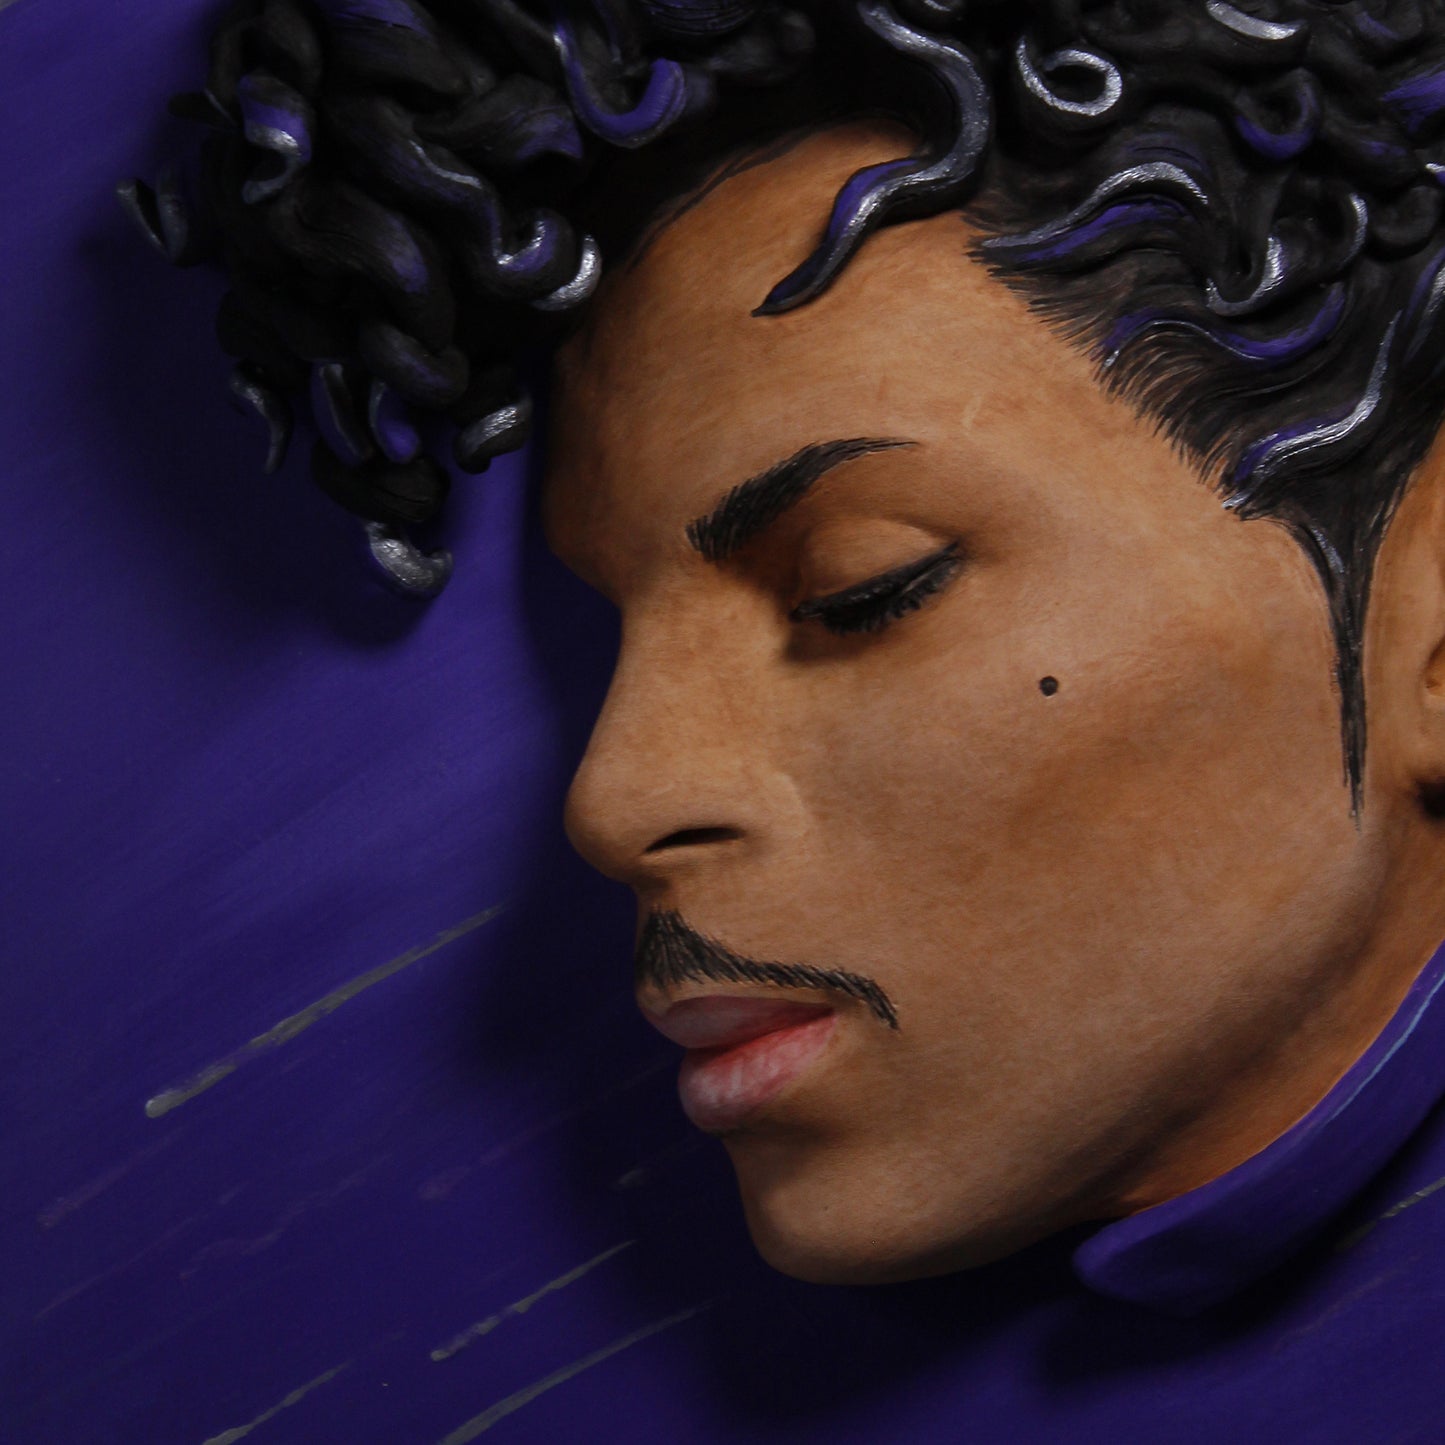 Prince - Purple Rain 3D Wall Panel Sculpture